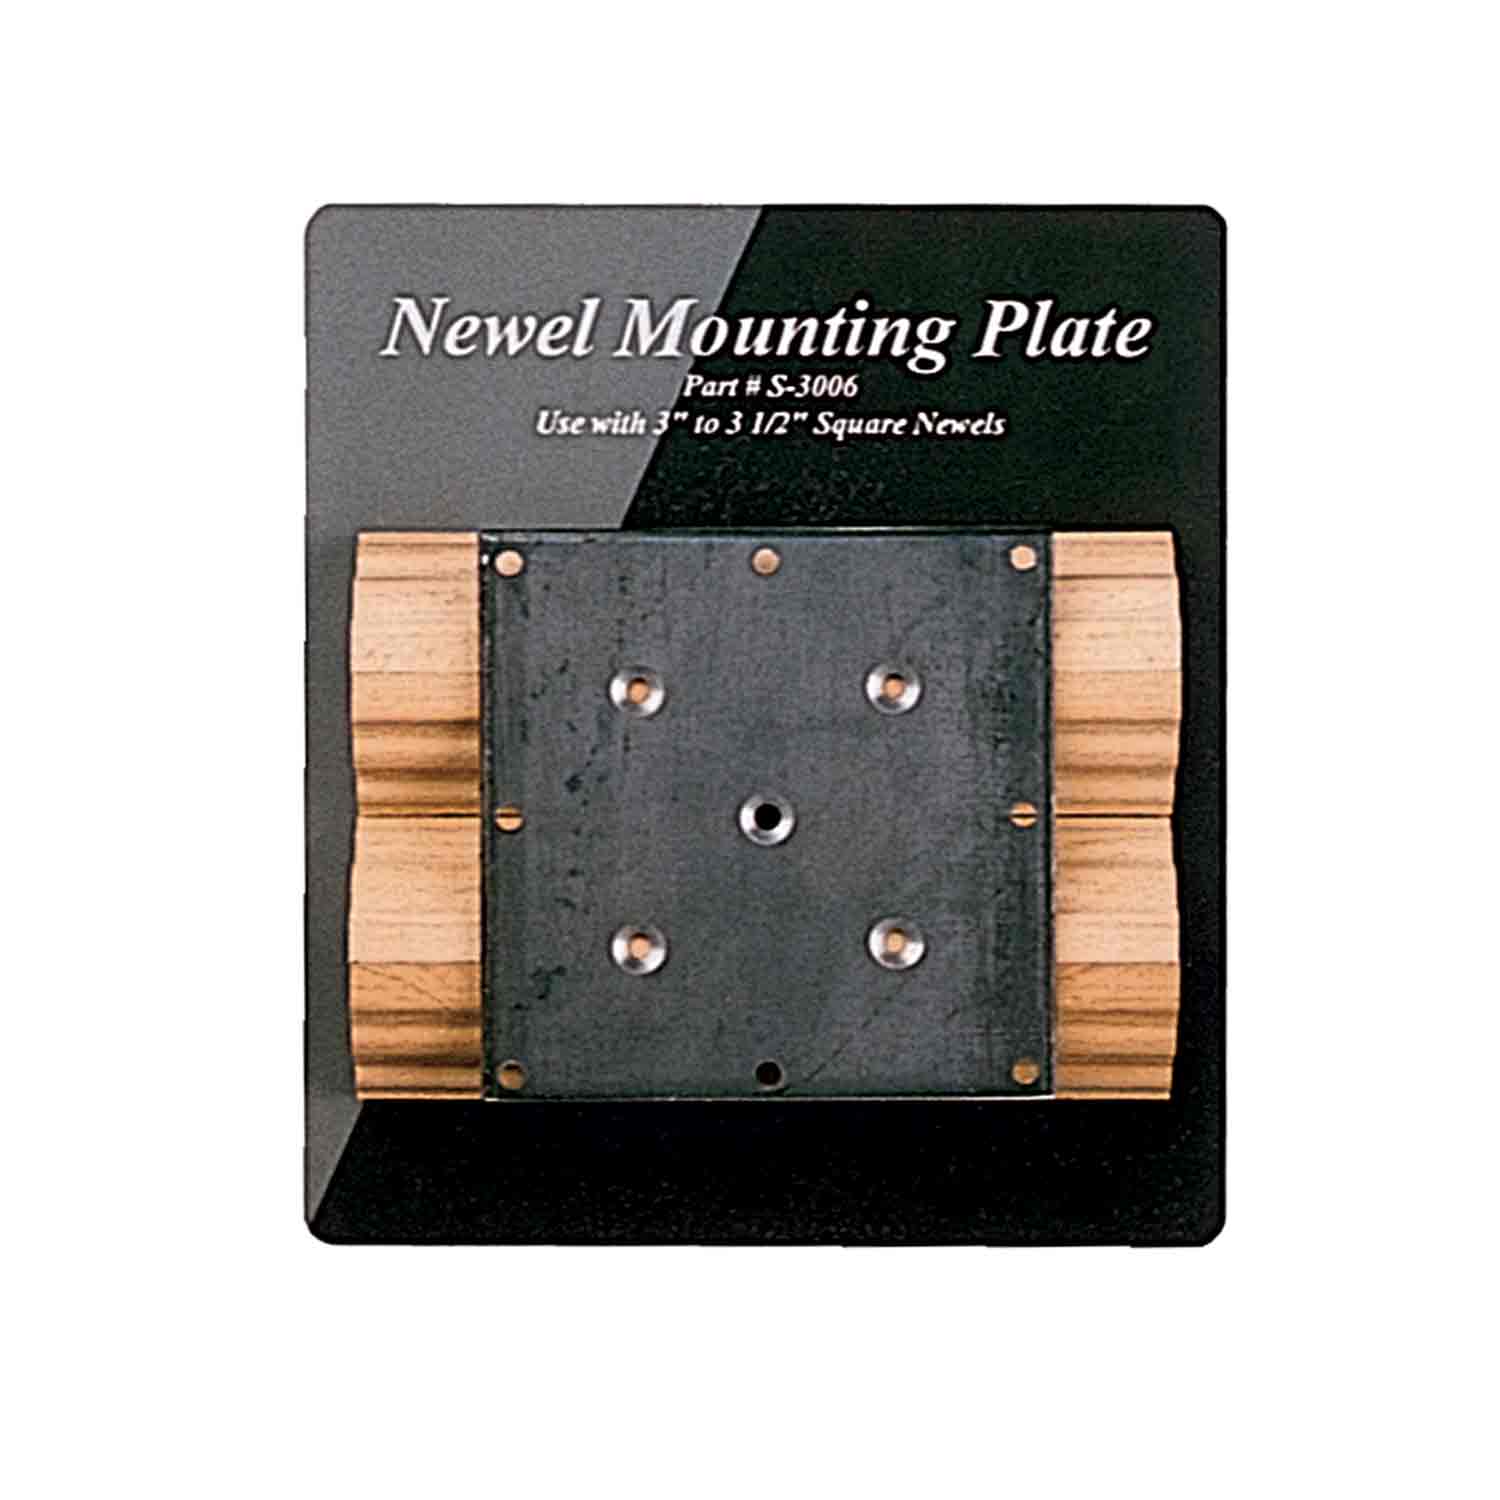 lj-3006 newel mounting plate